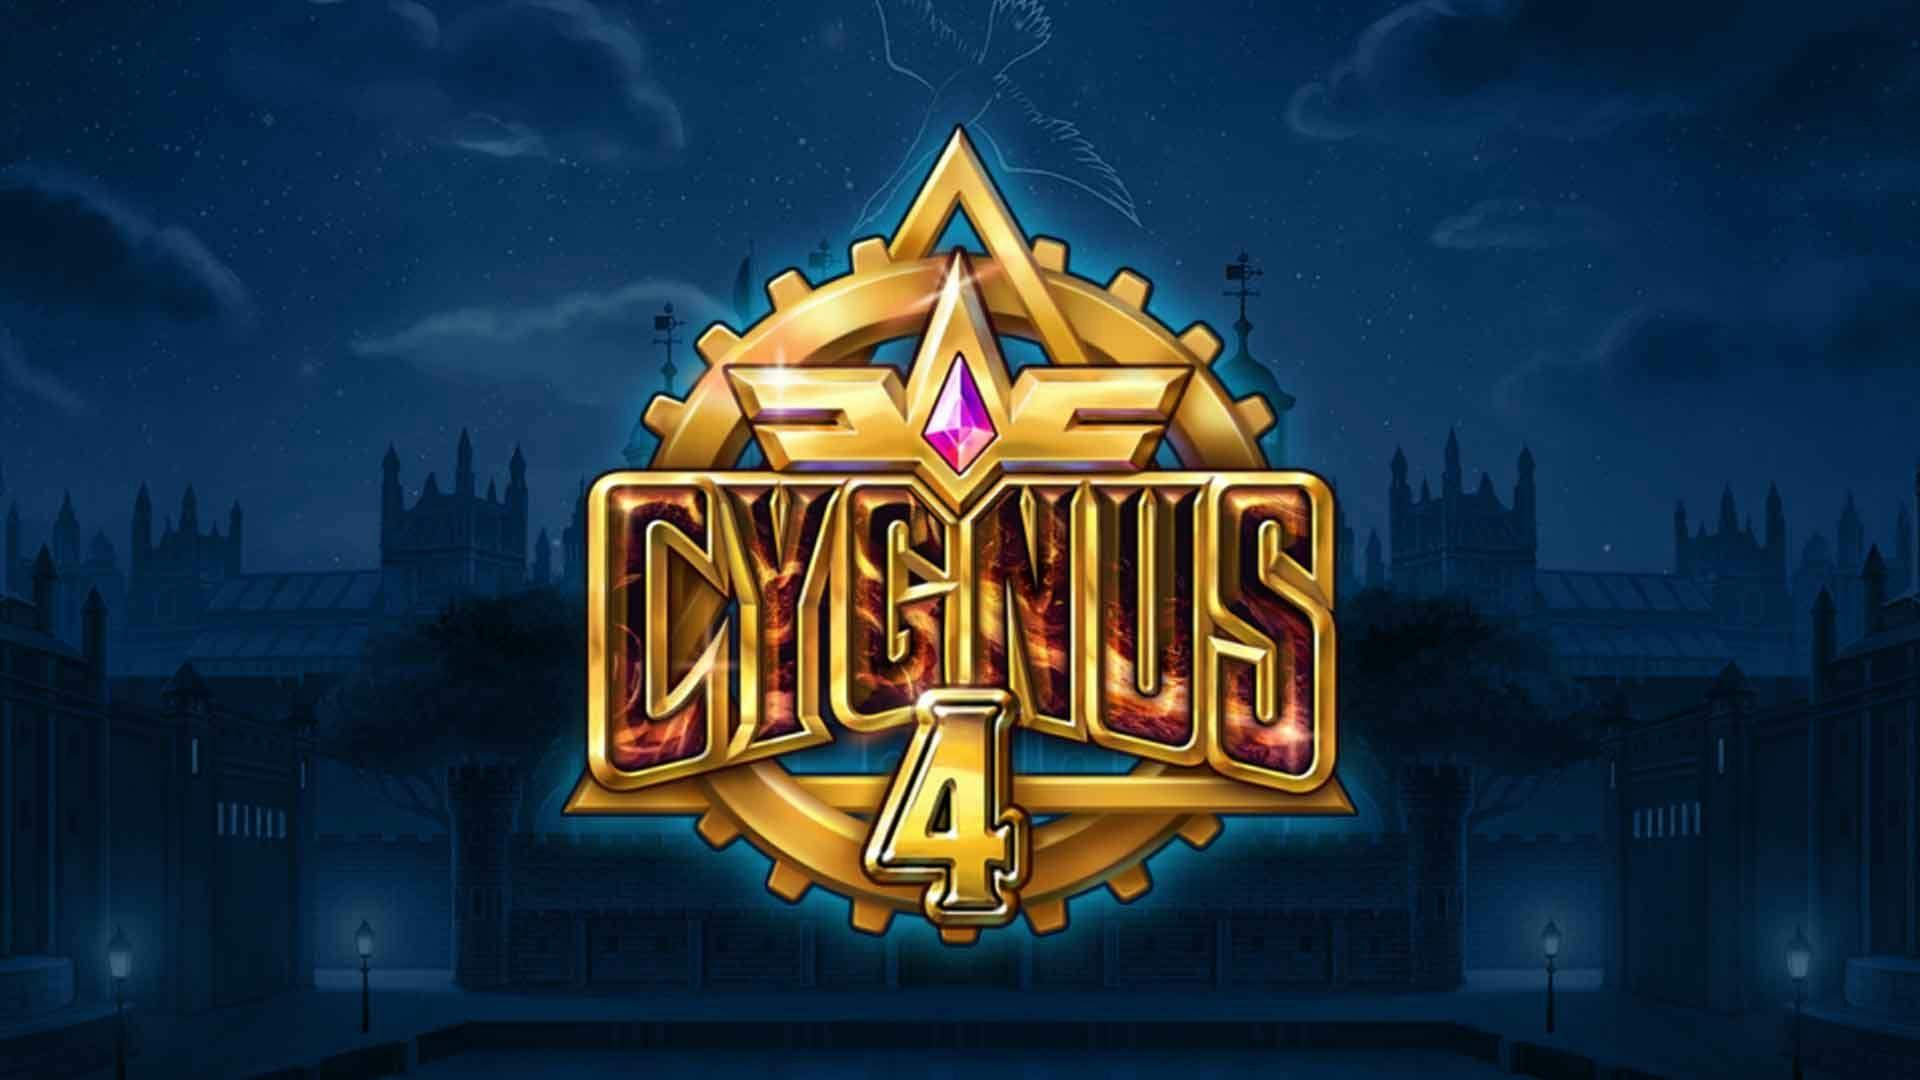 Cygnus 4 Slot Machine Online Free Game Play